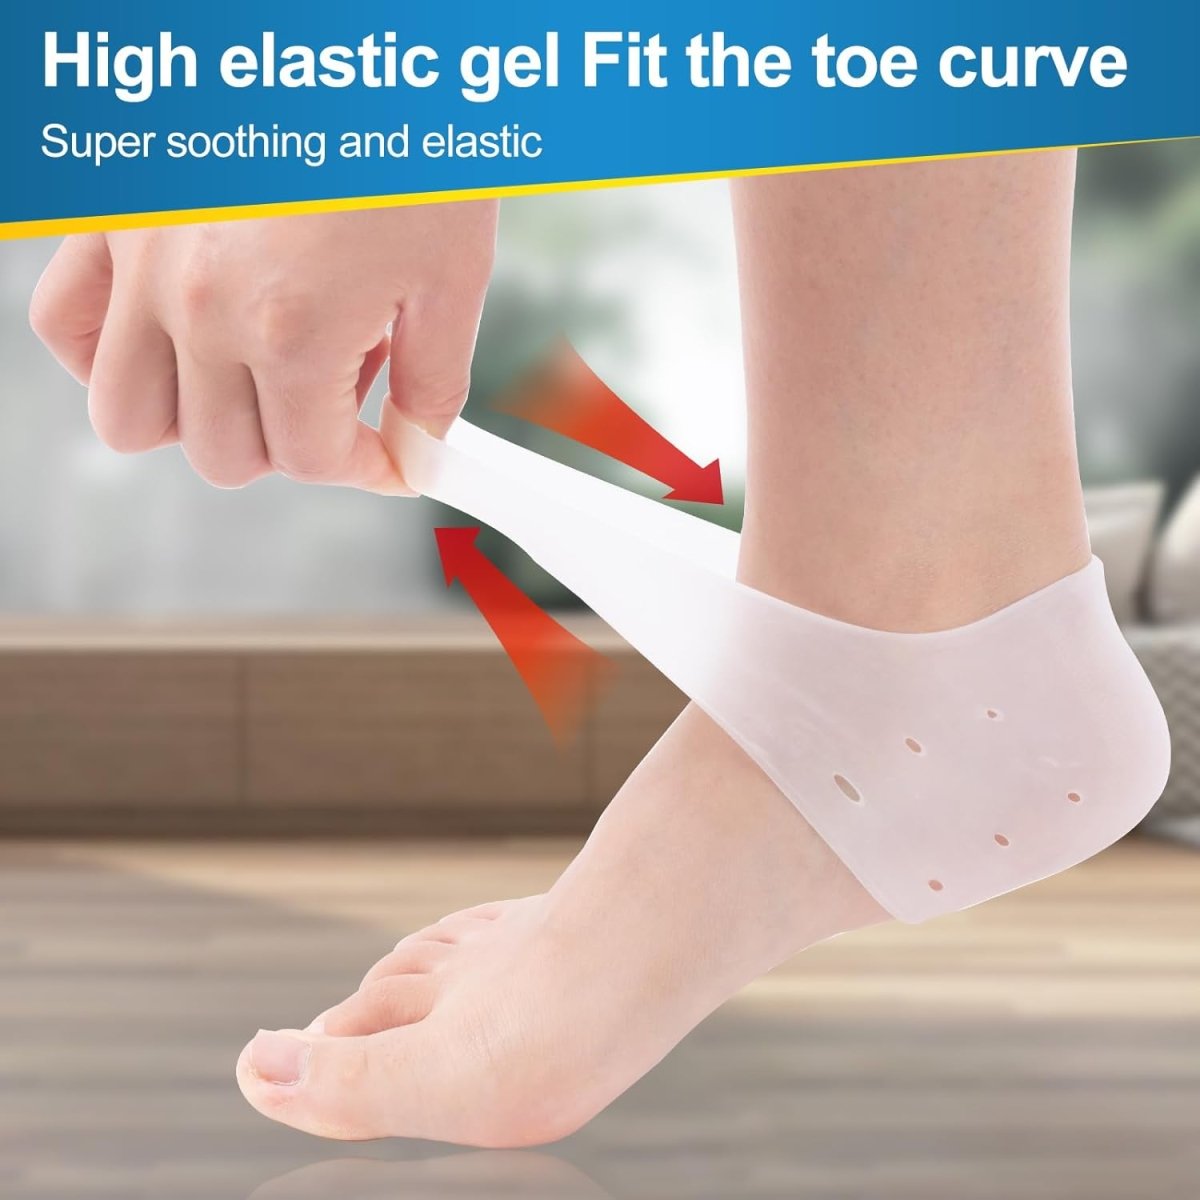 high elastic gel fit the toe curve